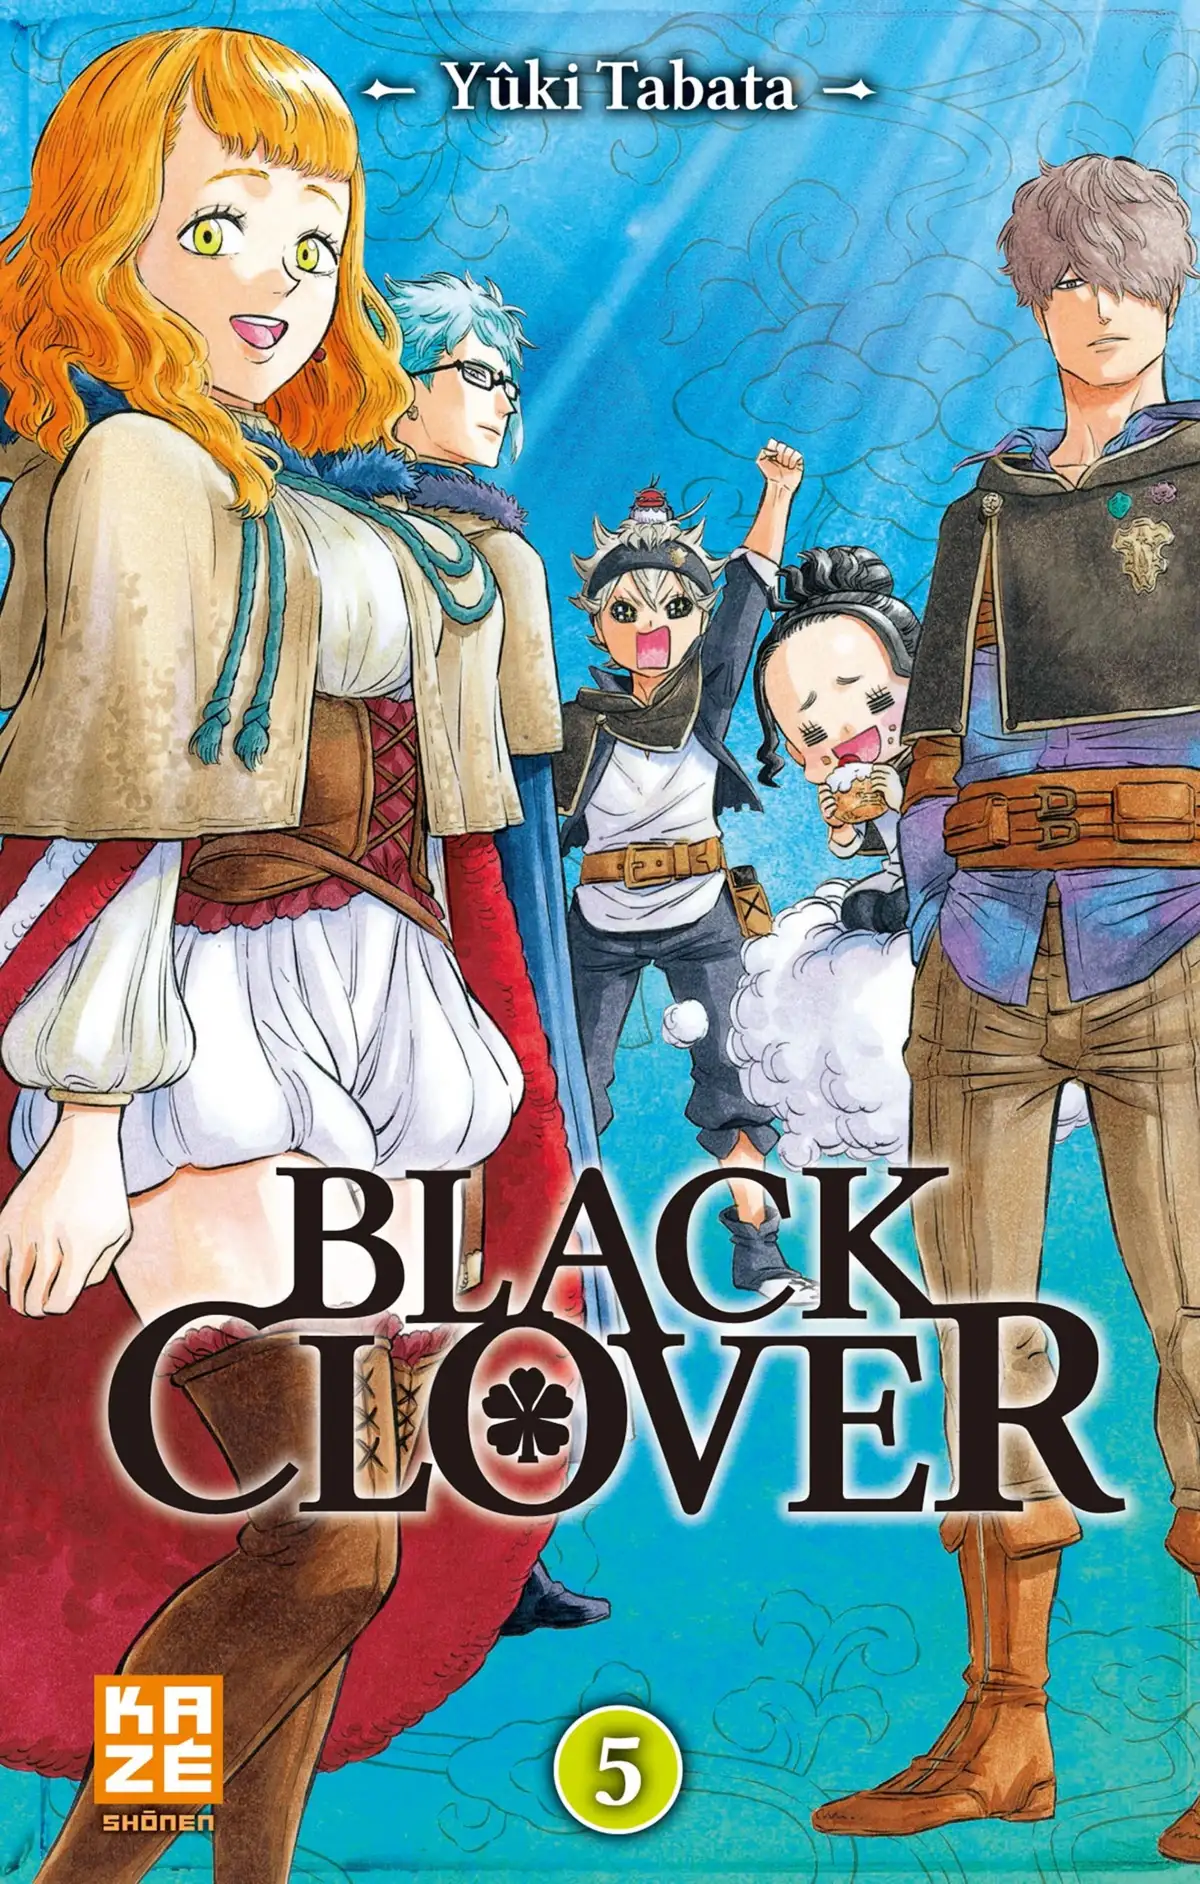 Black Clover Volume 5 page 1